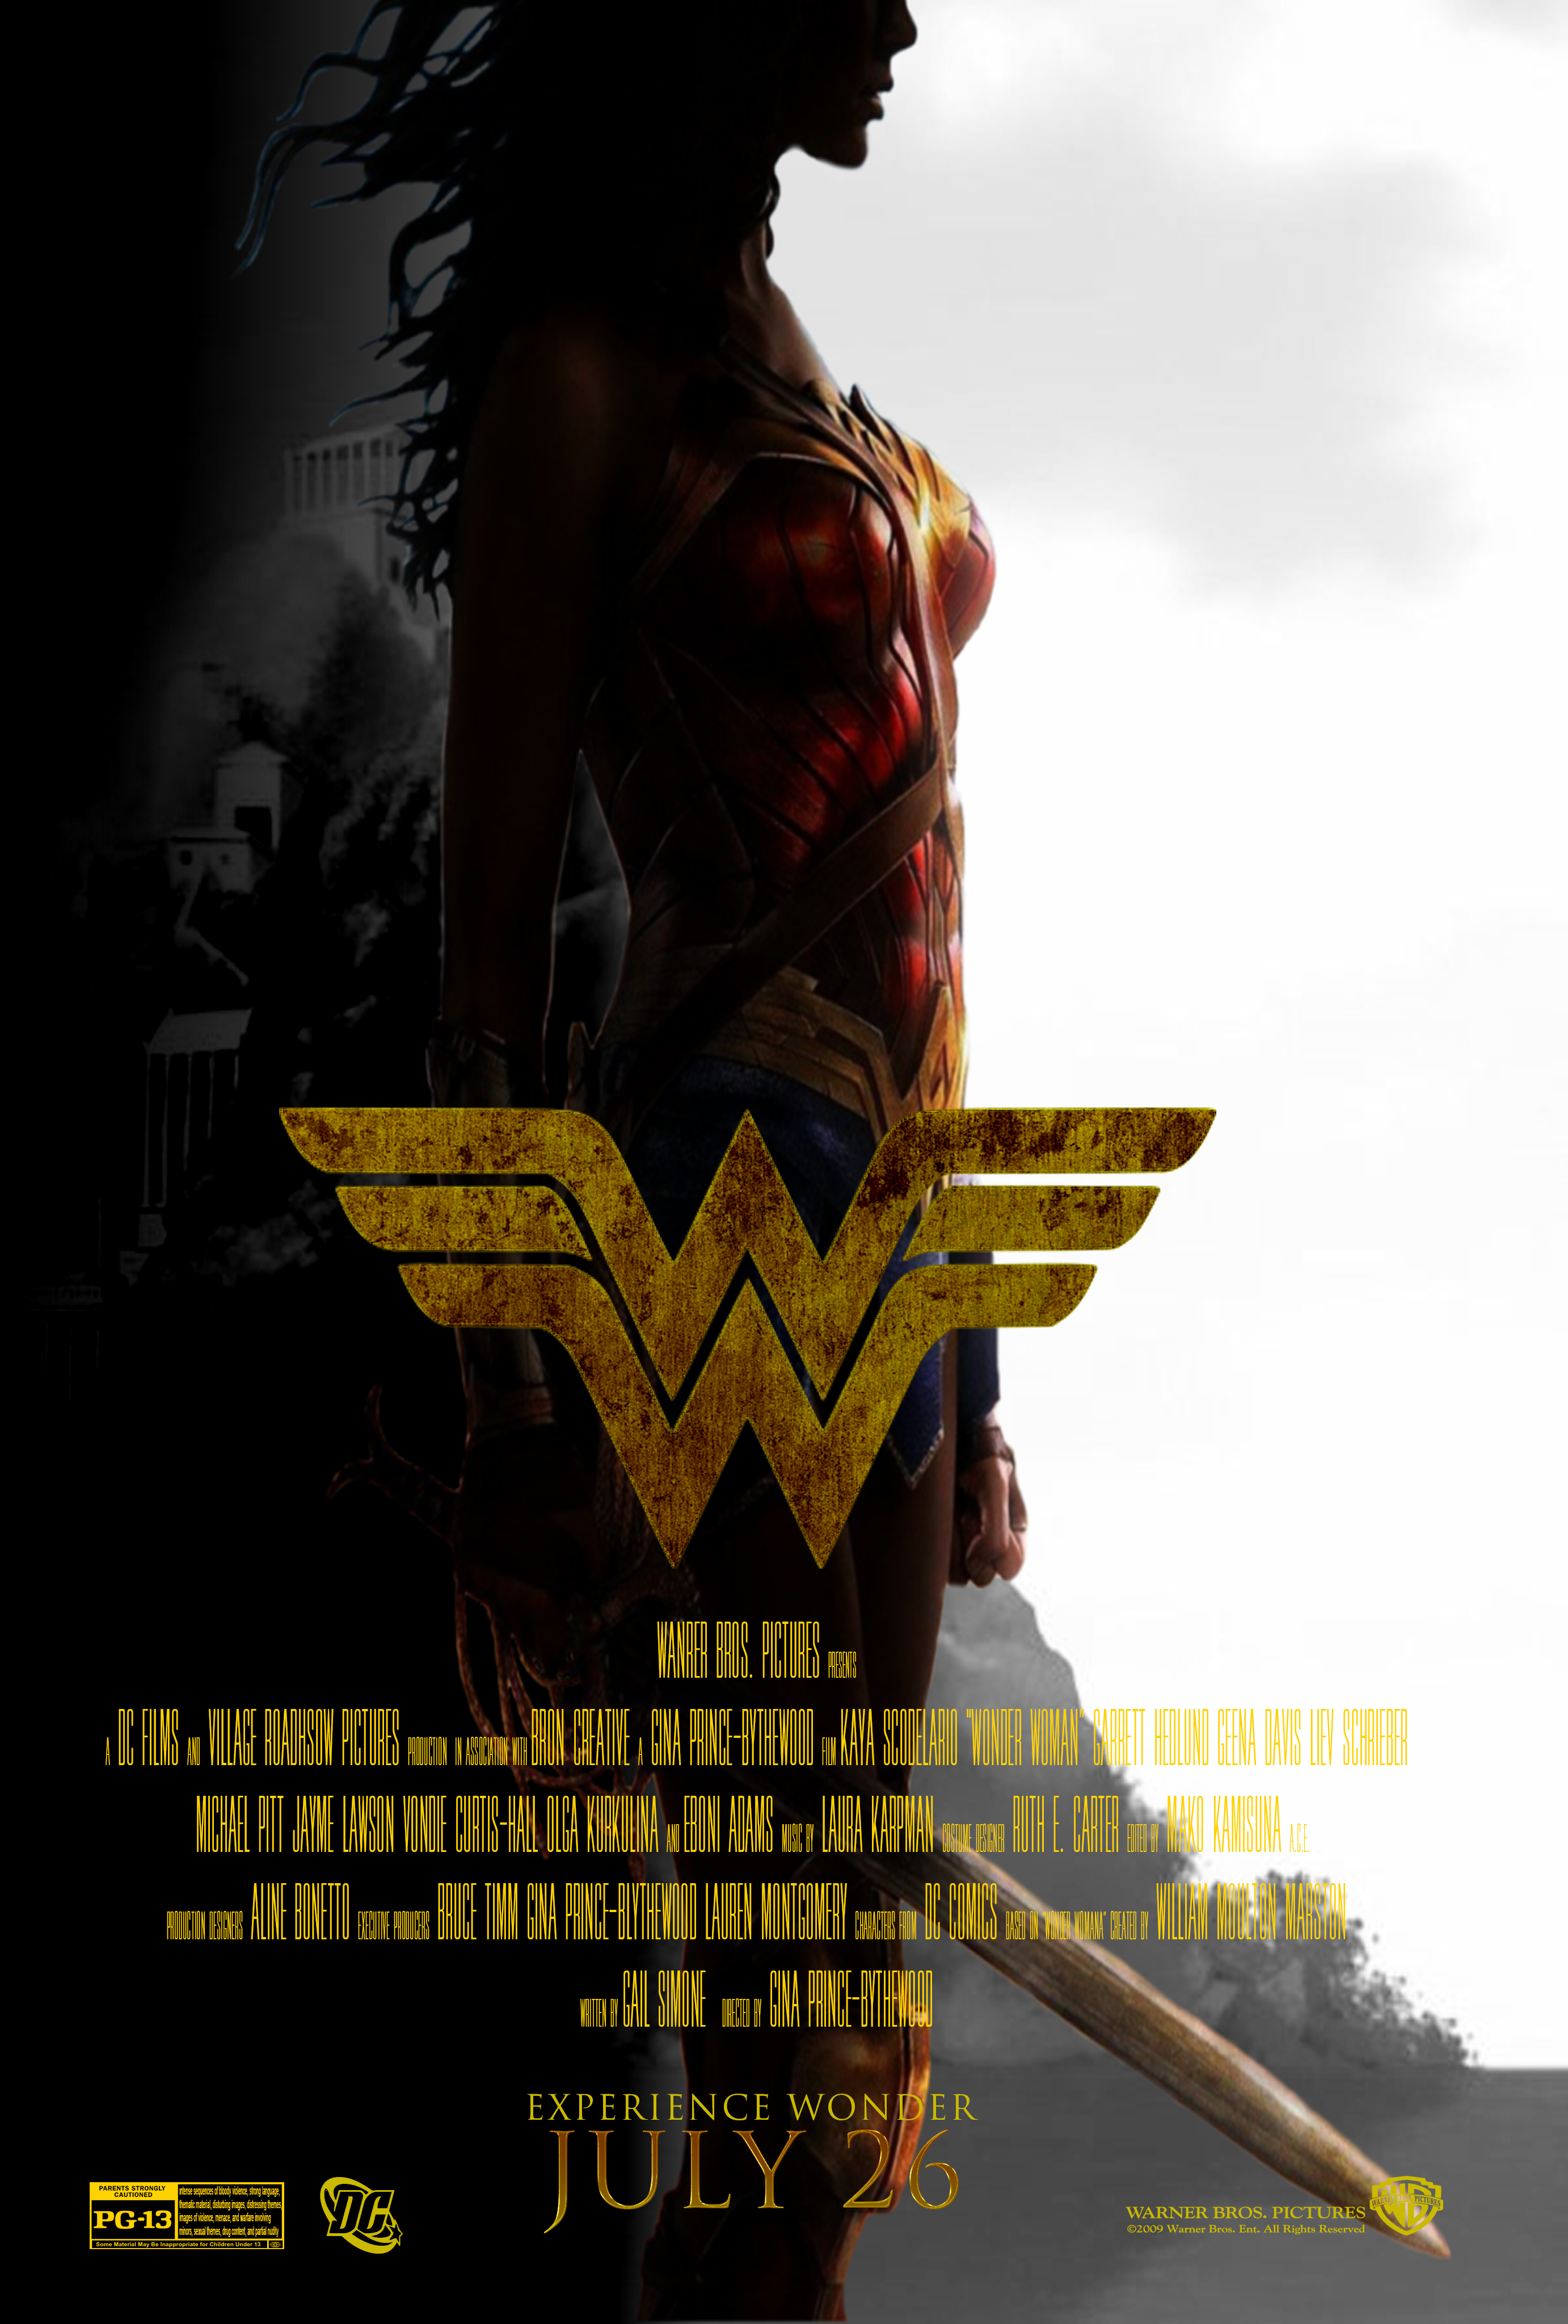 Wonder Woman (2017) - “Cast” credits - IMDb